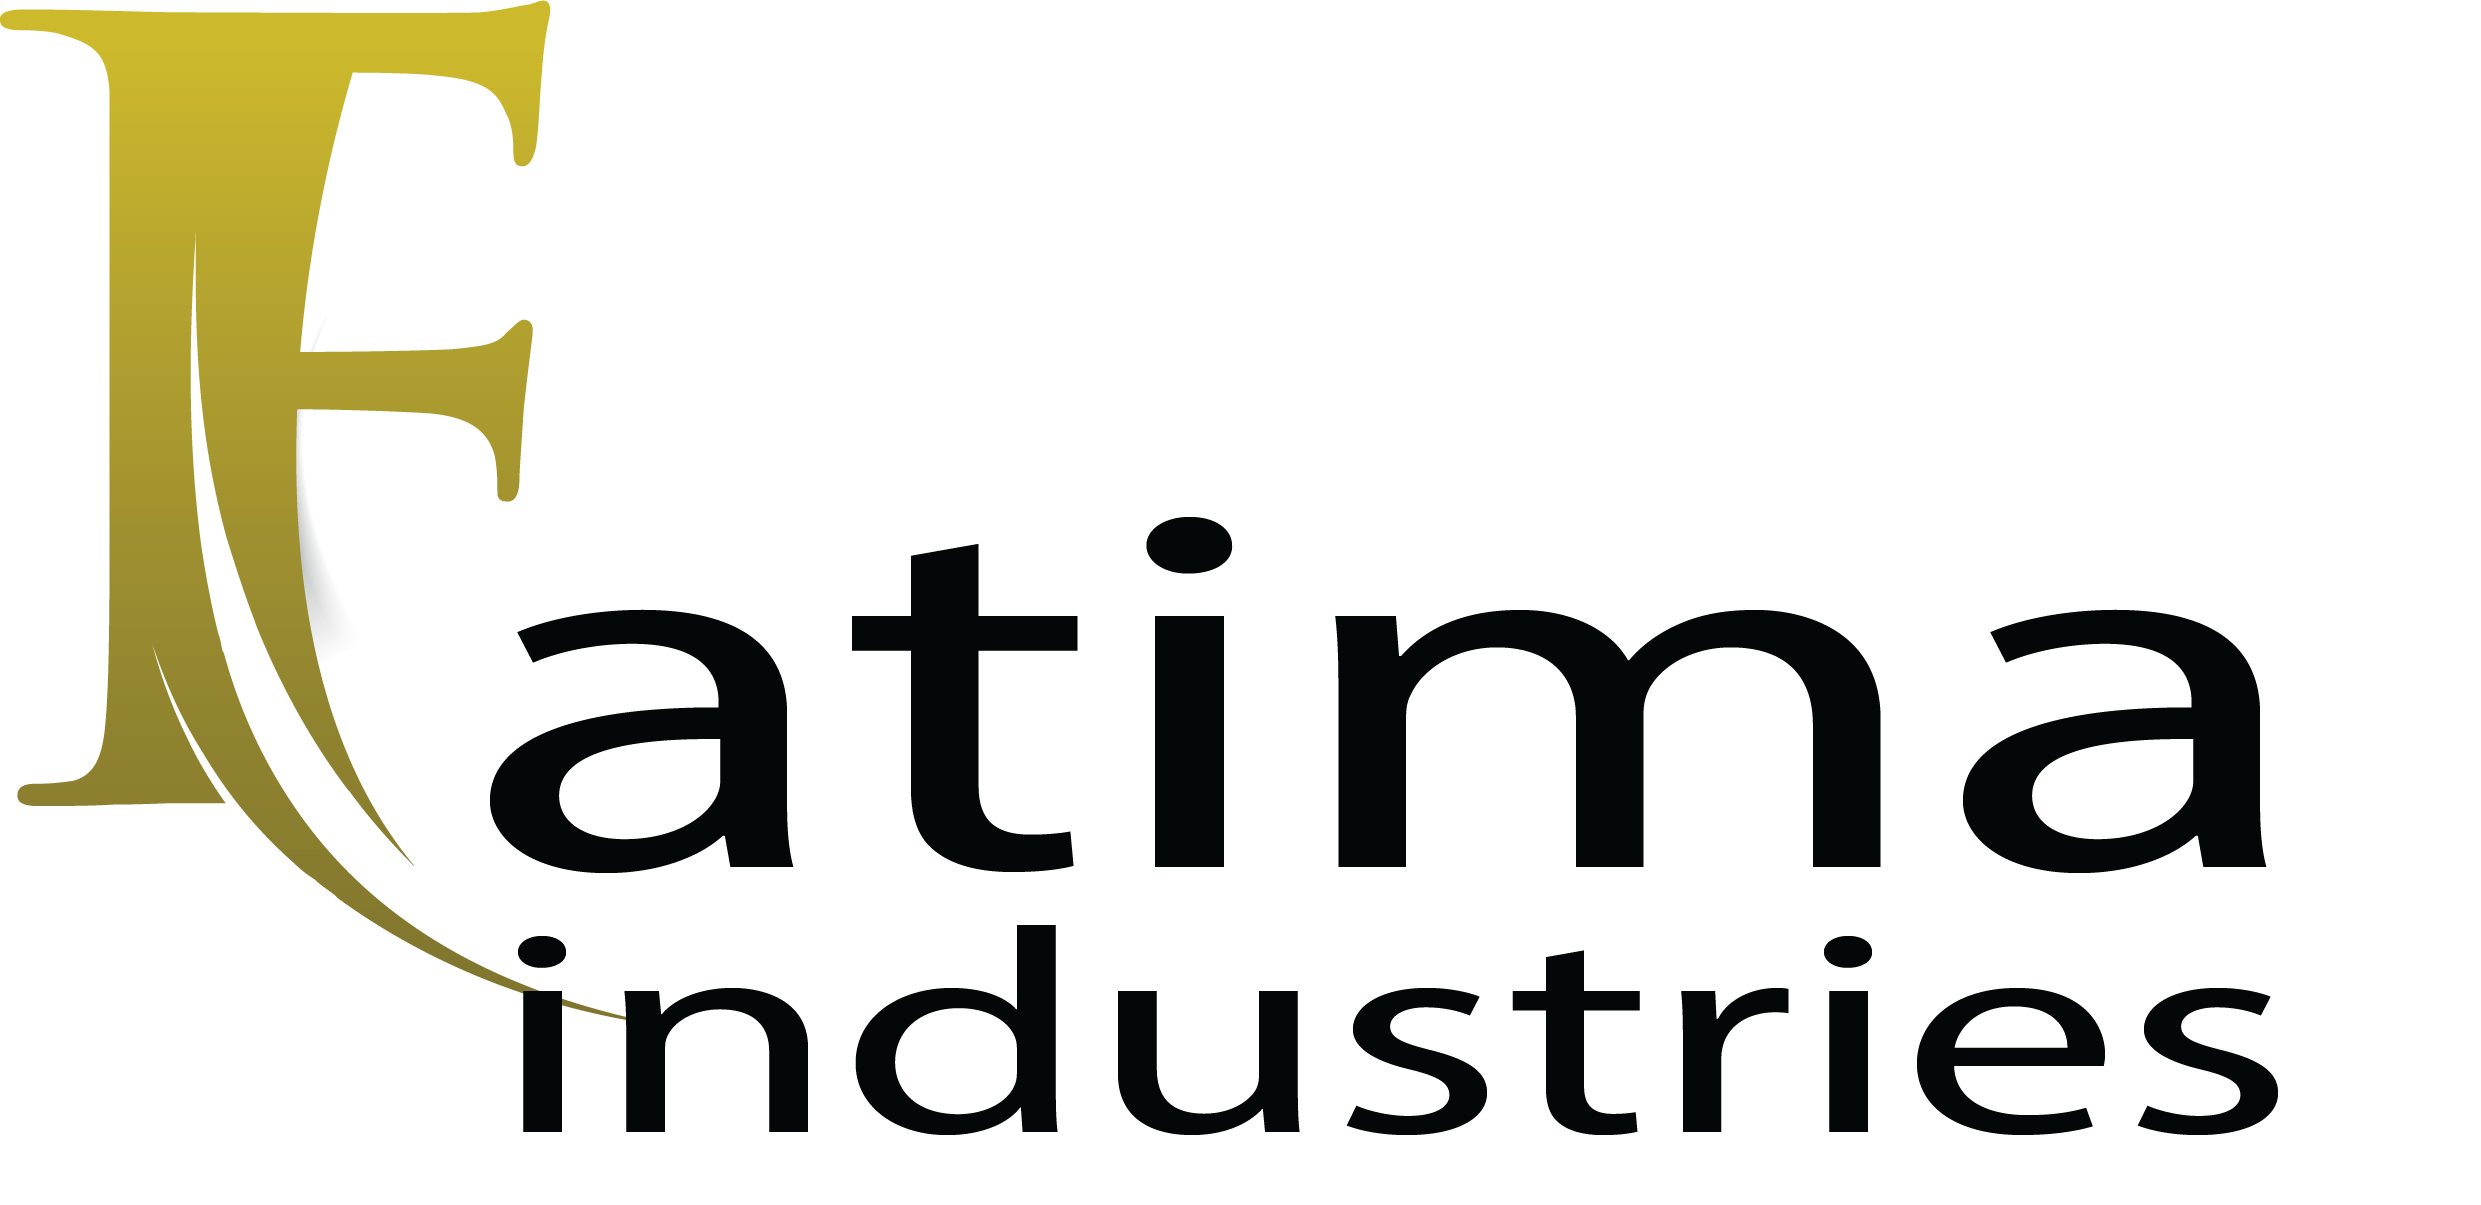 Fatima Industries